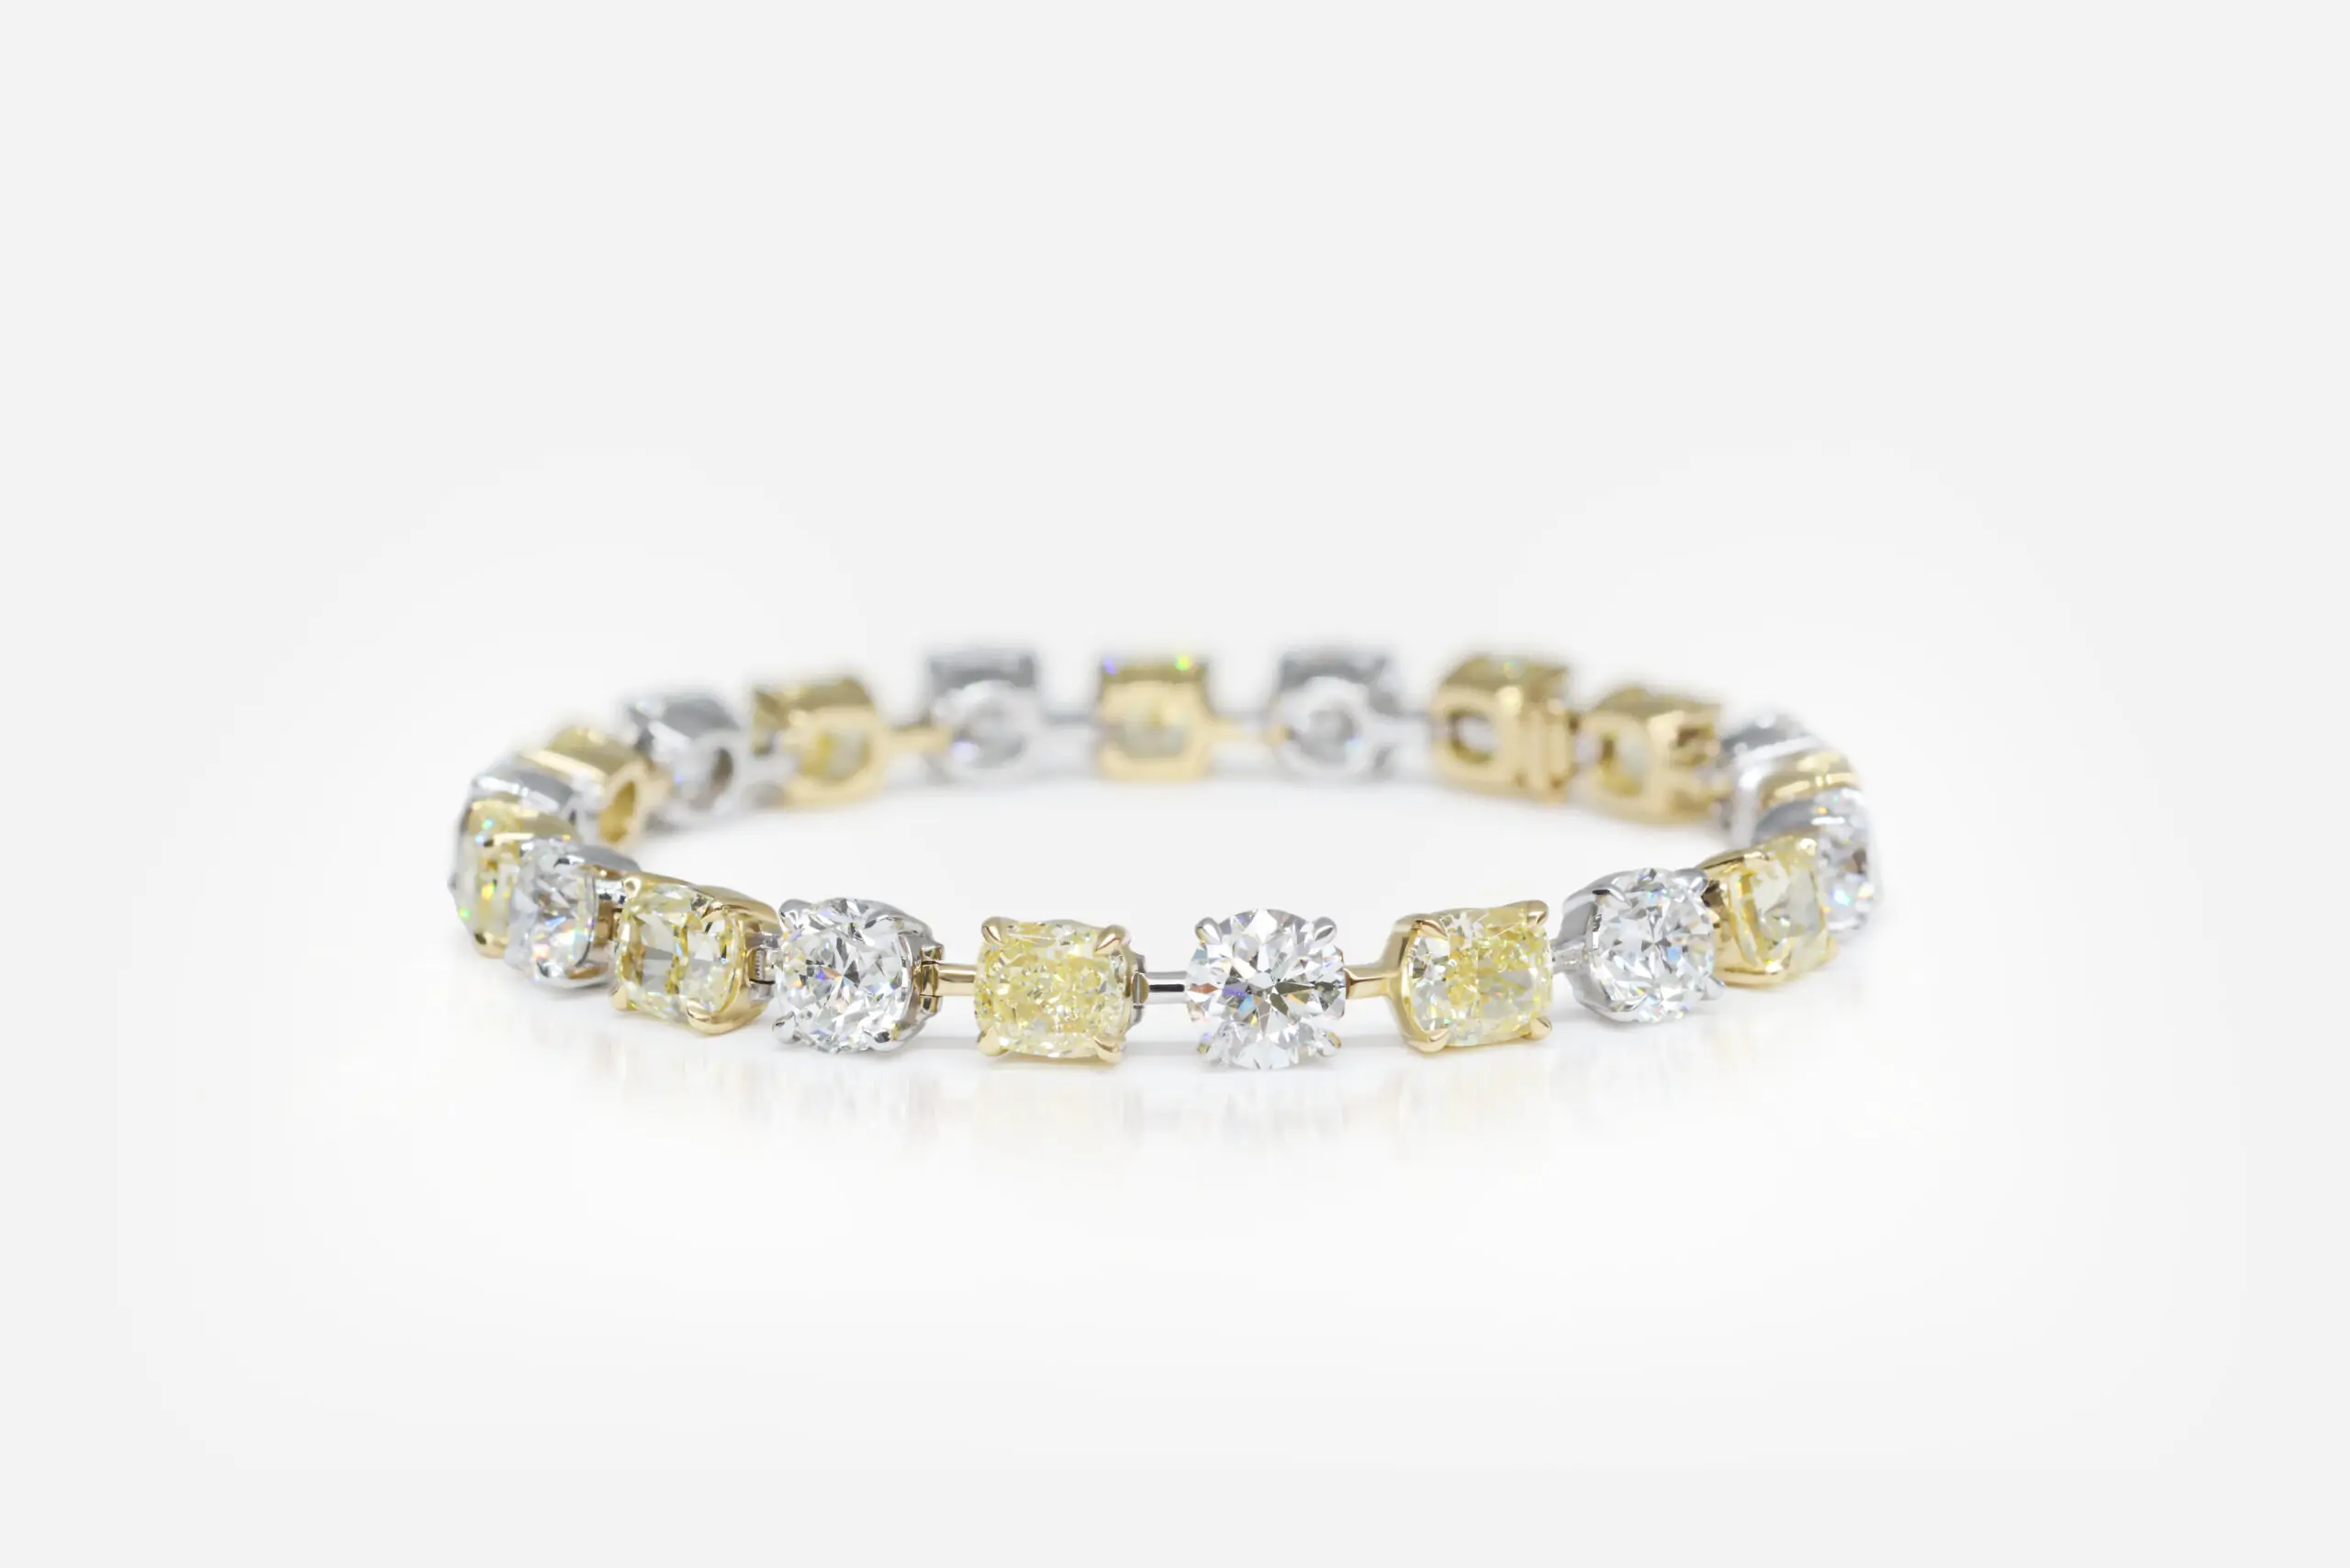 21 carat F-H / Fancy Yellow Round / Cushion shape Diamond Bracelet - picture 1